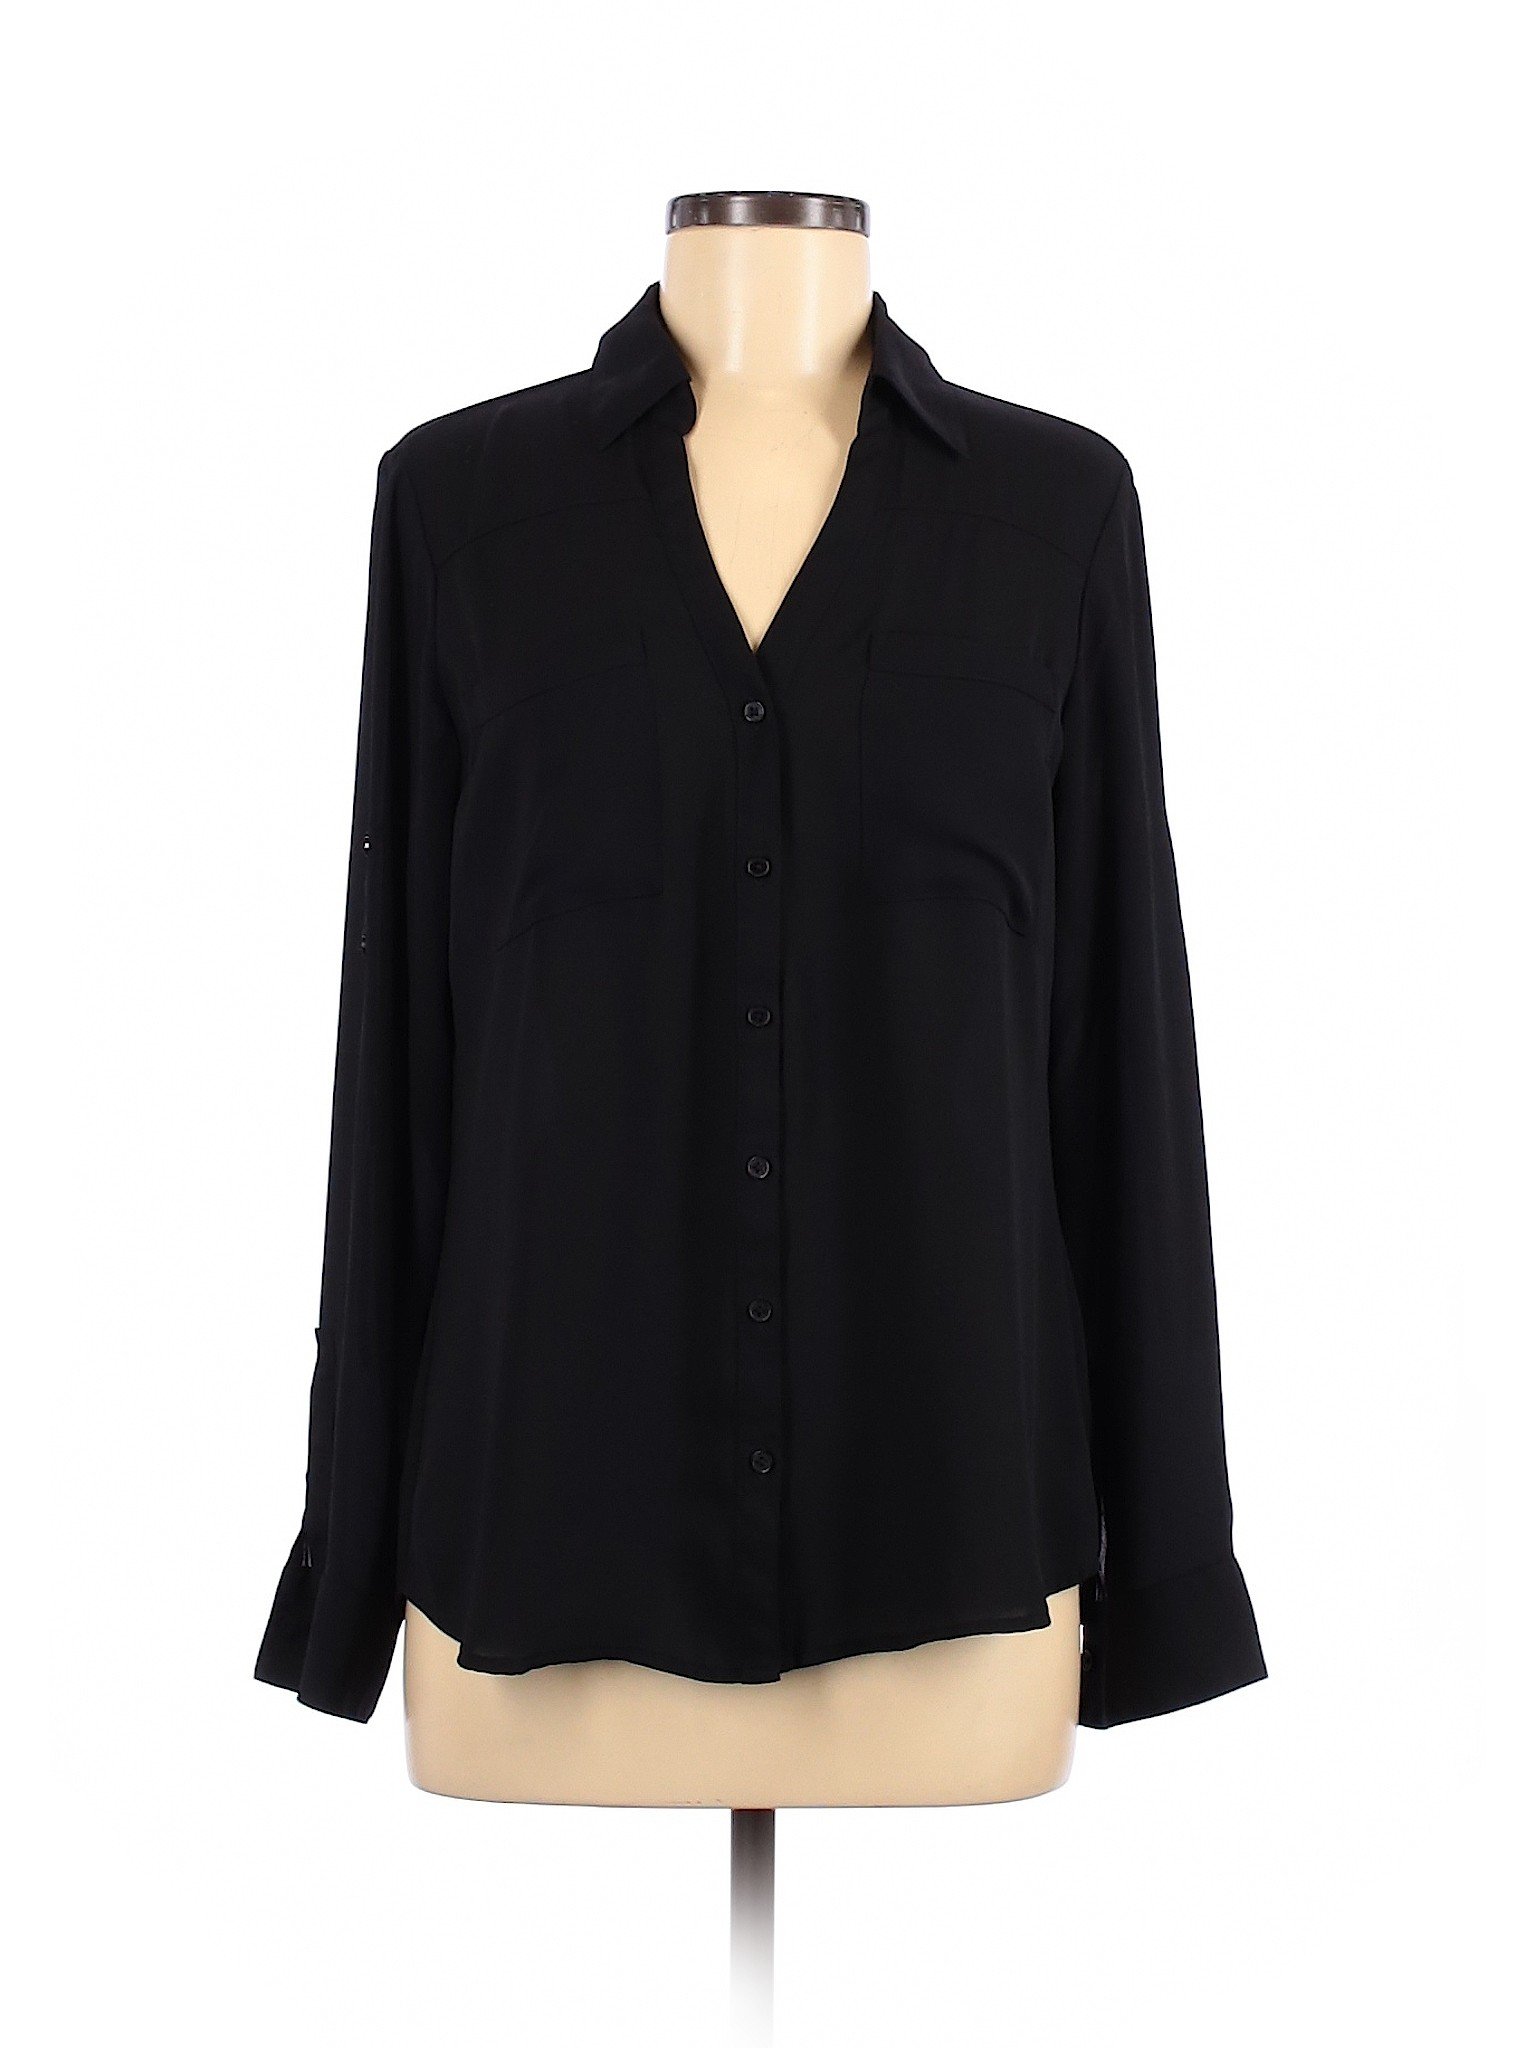 Express Women Black Long Sleeve Blouse M | eBay